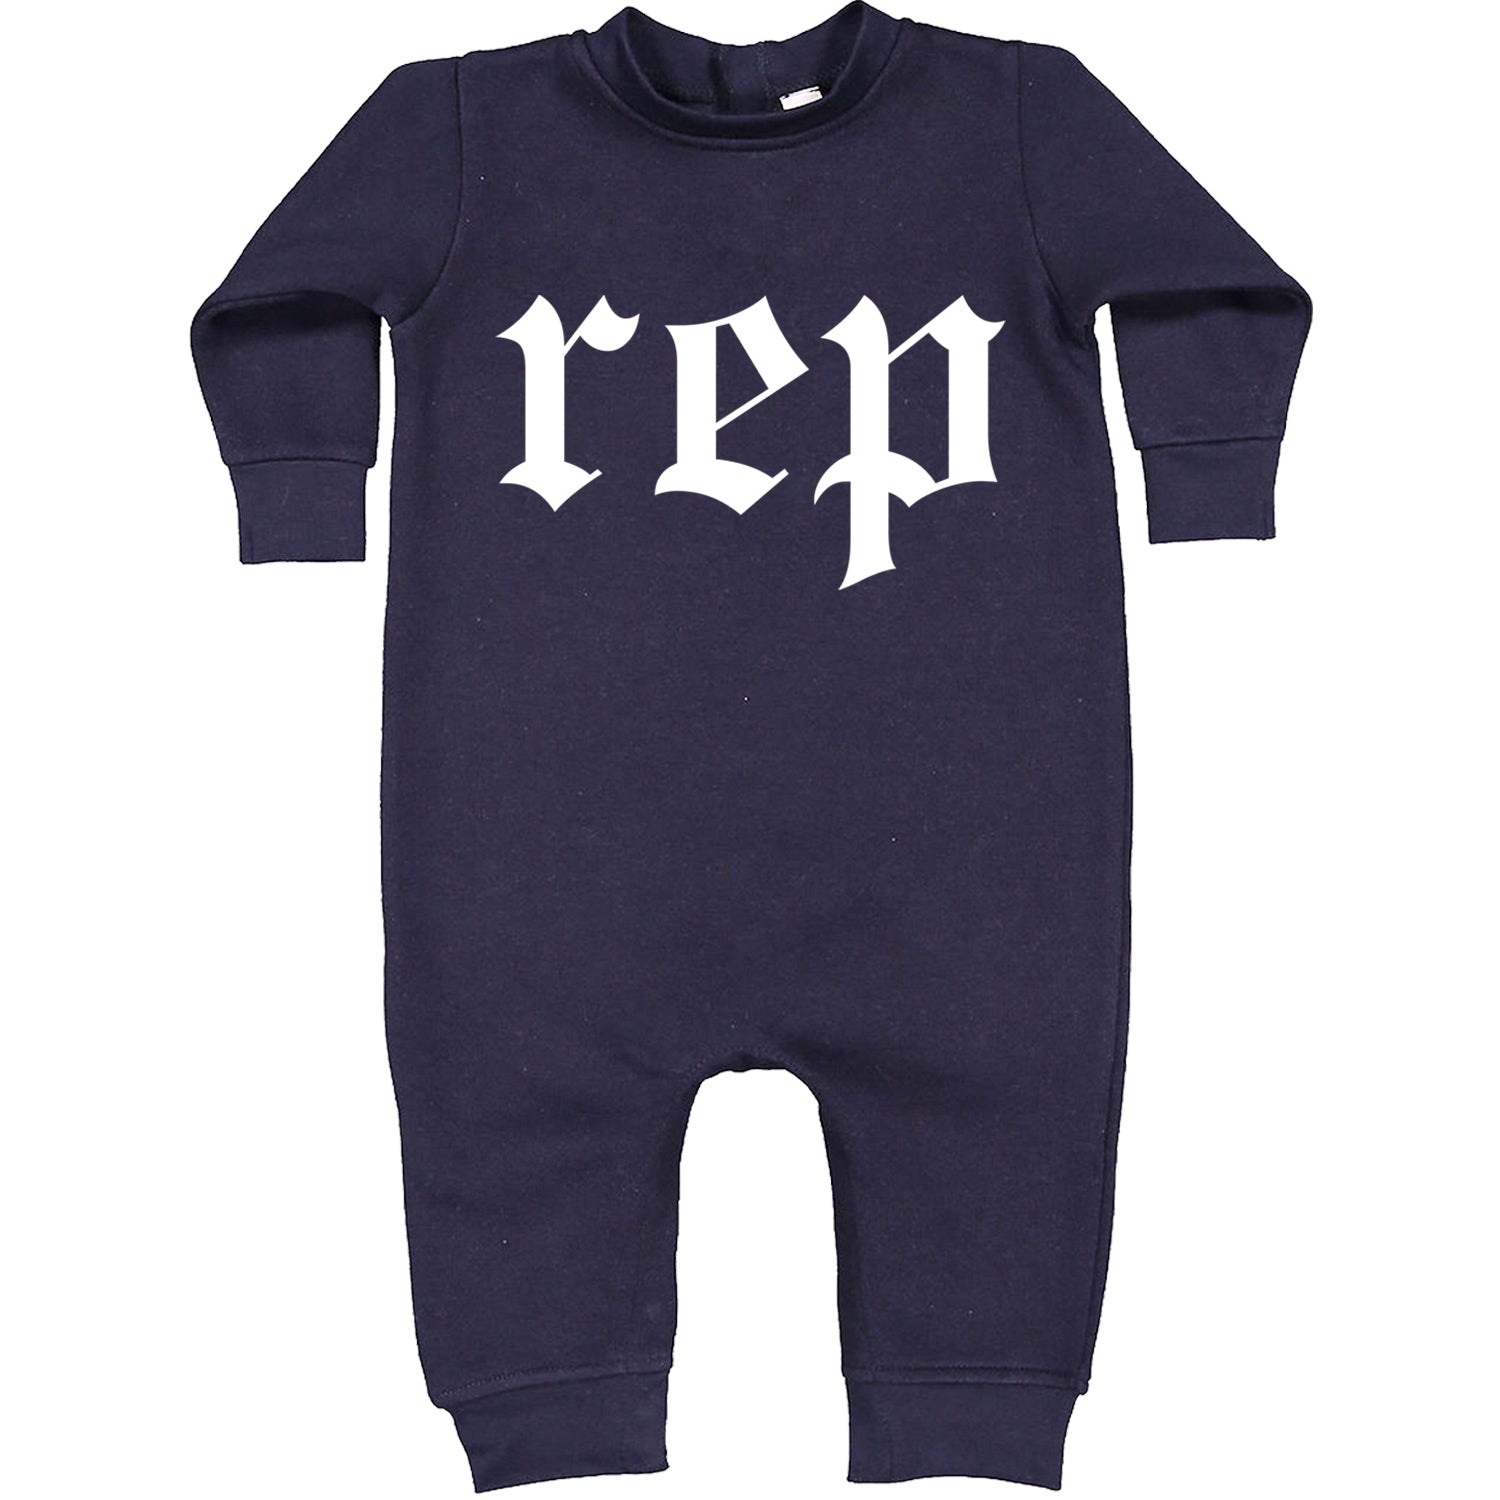 REP Reputation Eras Music Lover Gift Fan Favorite Toddler Hoodie And Infant Fleece Romper Navy Blue